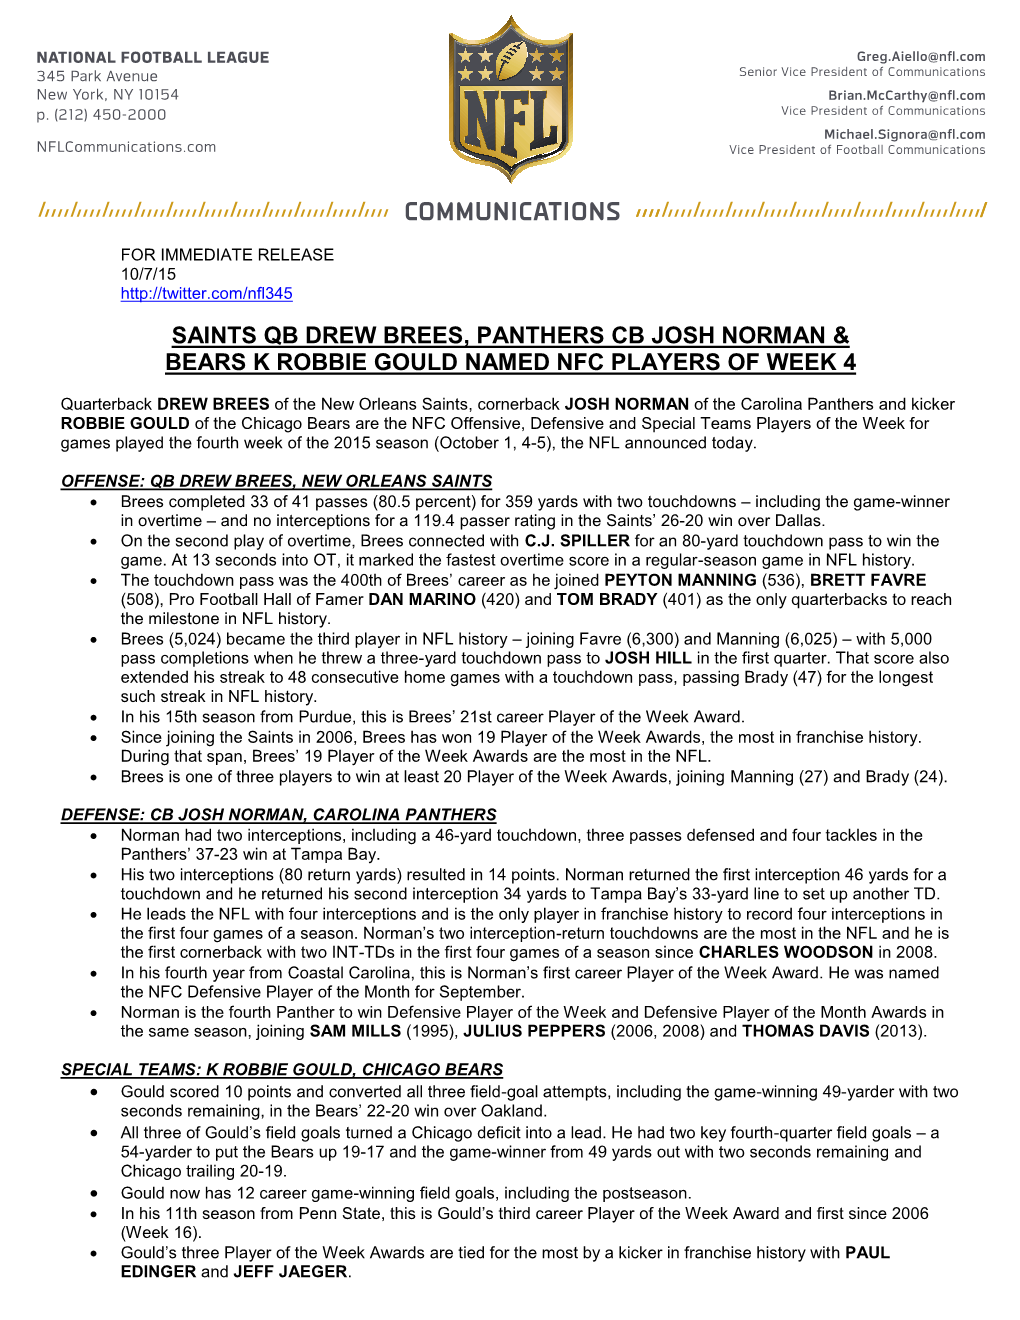 Saints Qb Drew Brees, Panthers Cb Josh Norman & Bears K Robbie Gould Named Nfc Players of Week 4